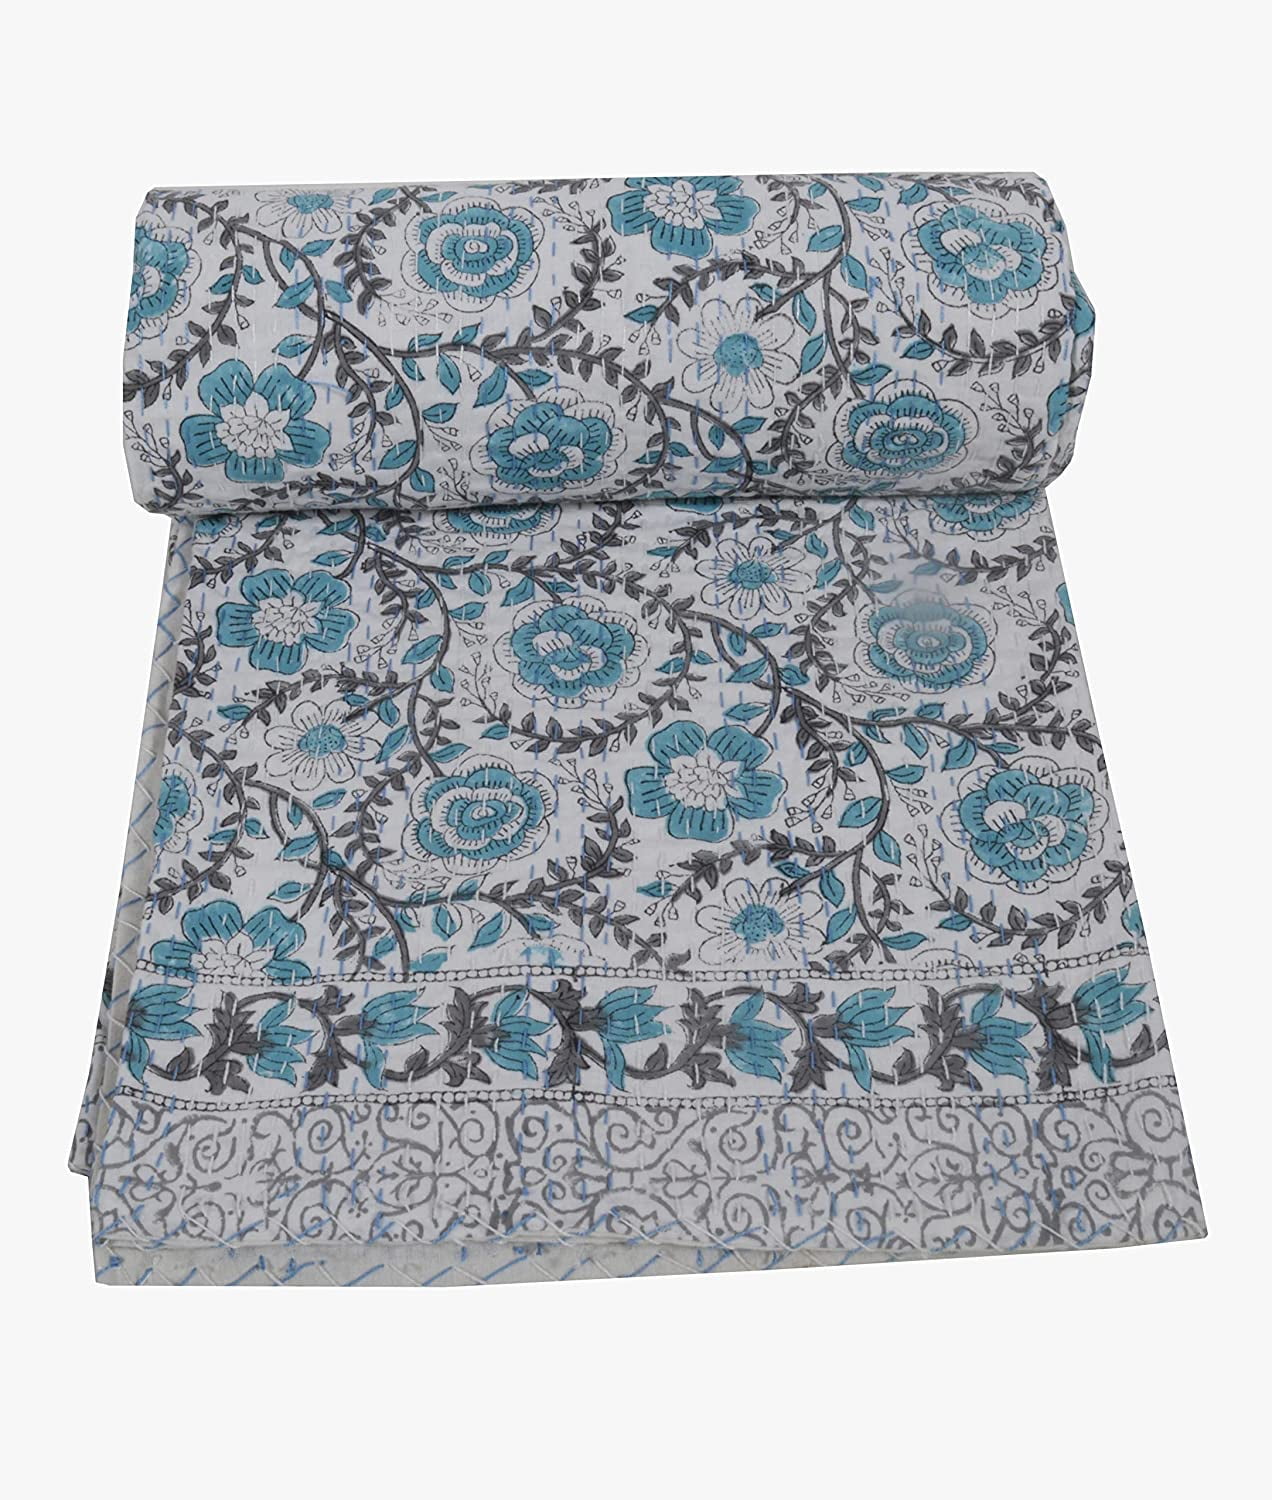 Hand Block Print Kantha Quilt Blanket Throw Bedspread Bedding Cotton Twin Size 